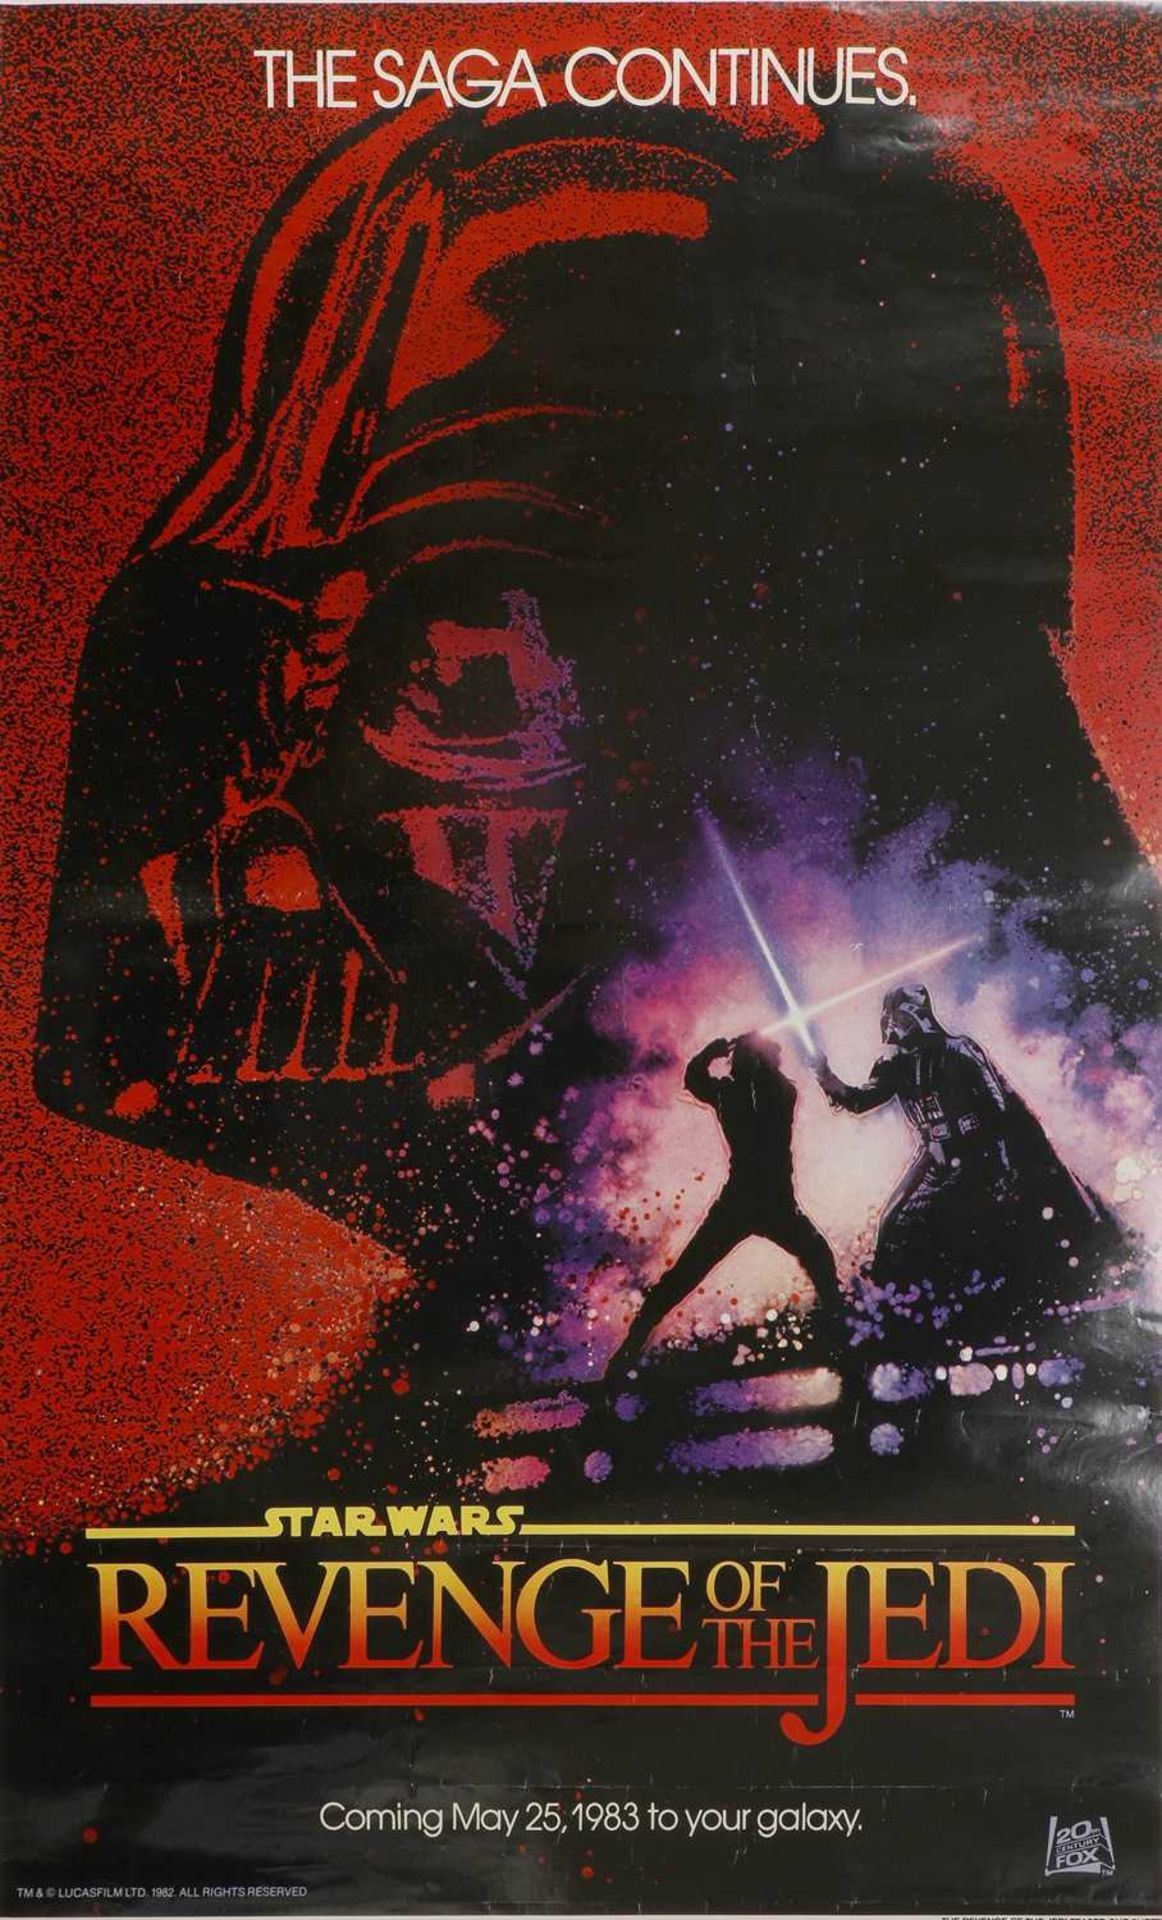 A Star Wars 'Revenge of the Jedi' film poster,